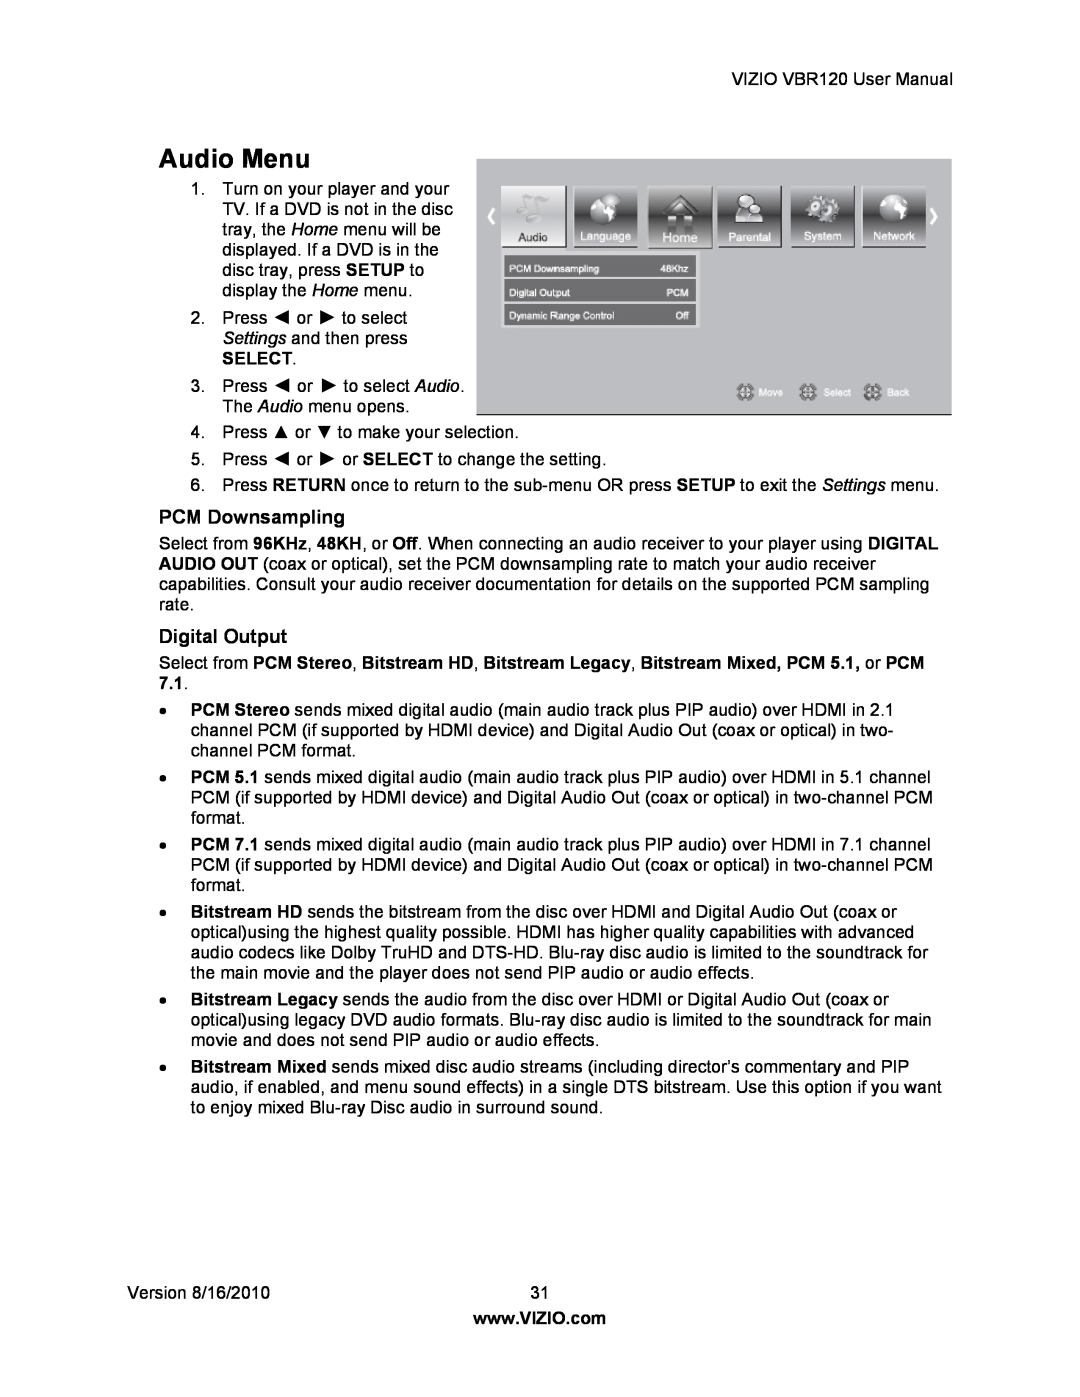 Vizio VBR 120 user manual Audio Menu, PCM Downsampling, Digital Output, Select 